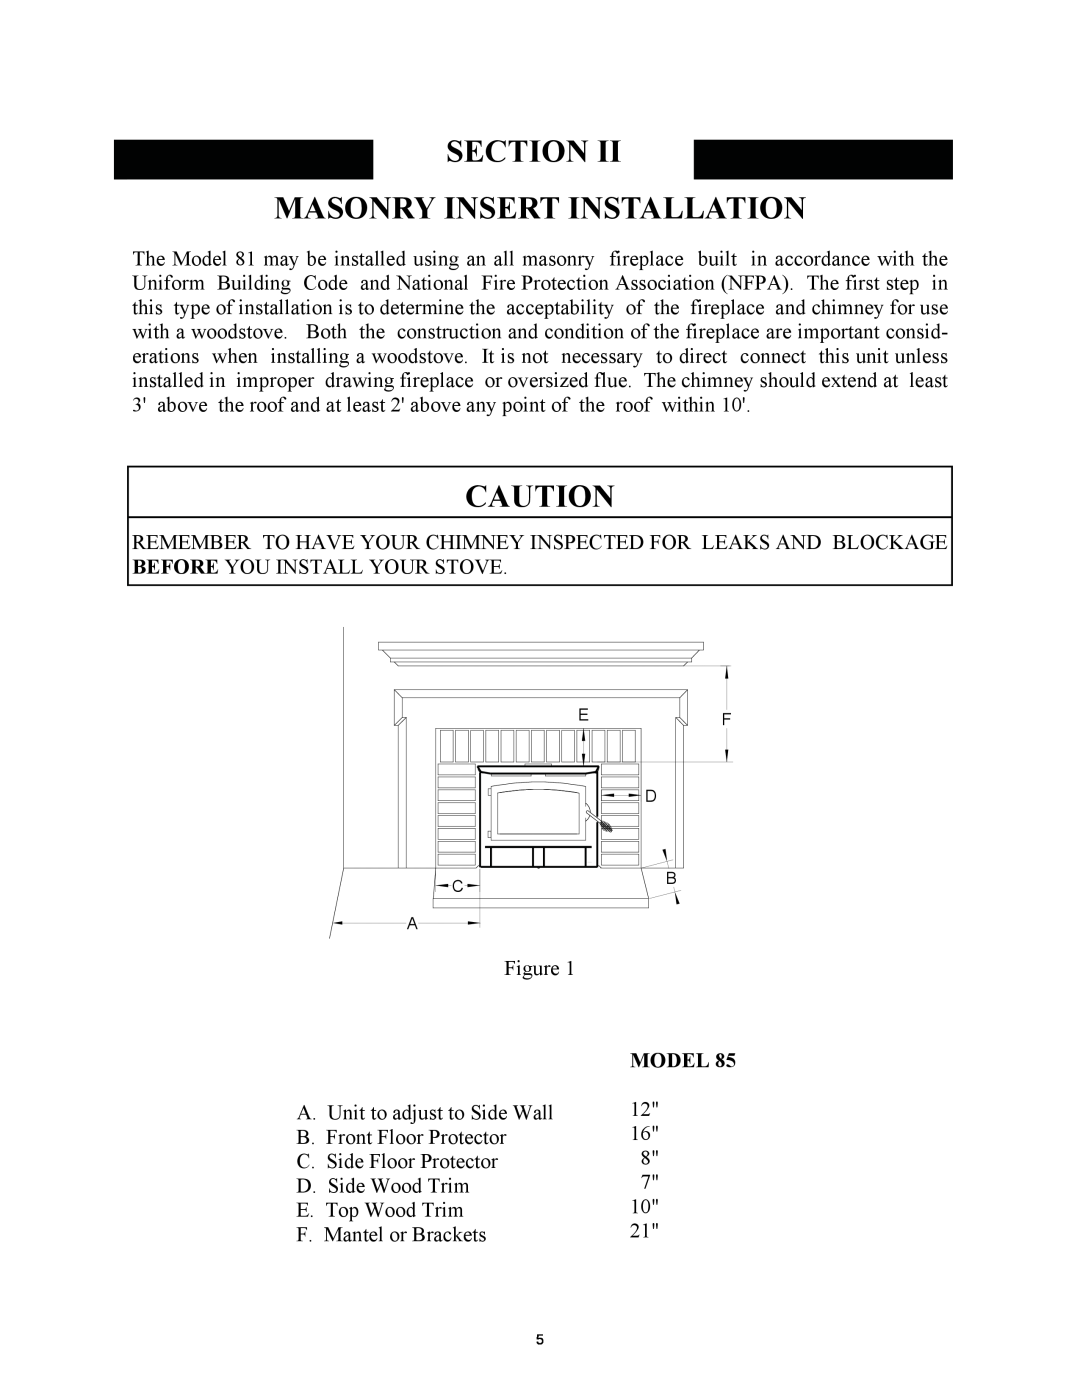 New Buck Corporation 85 installation instructions Section Masonry Insert Installation, Model 